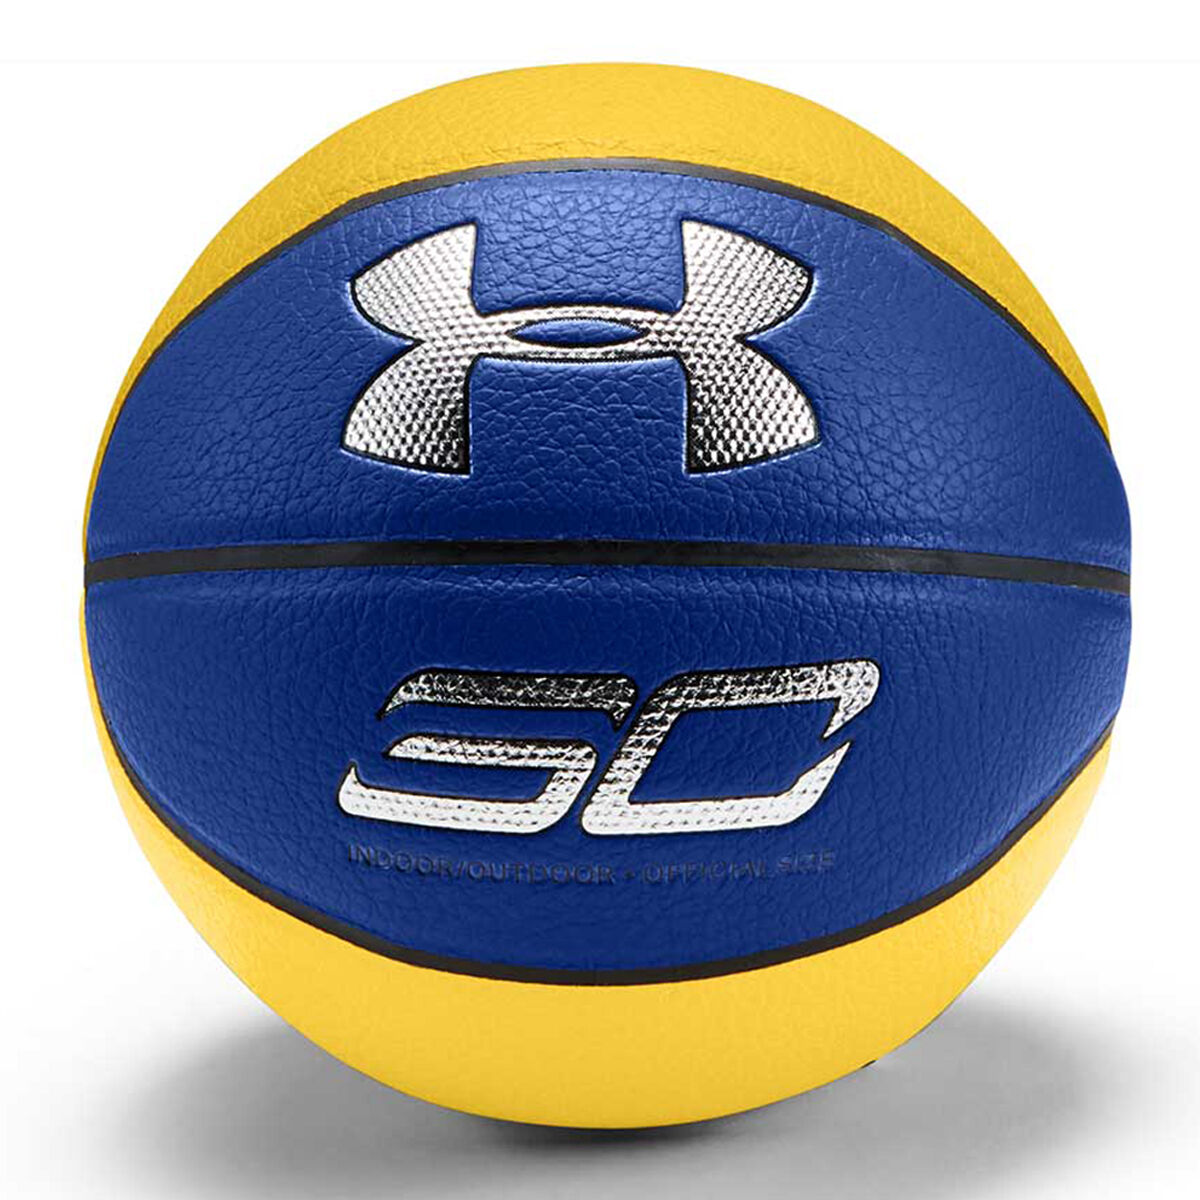 basketball ball under armour